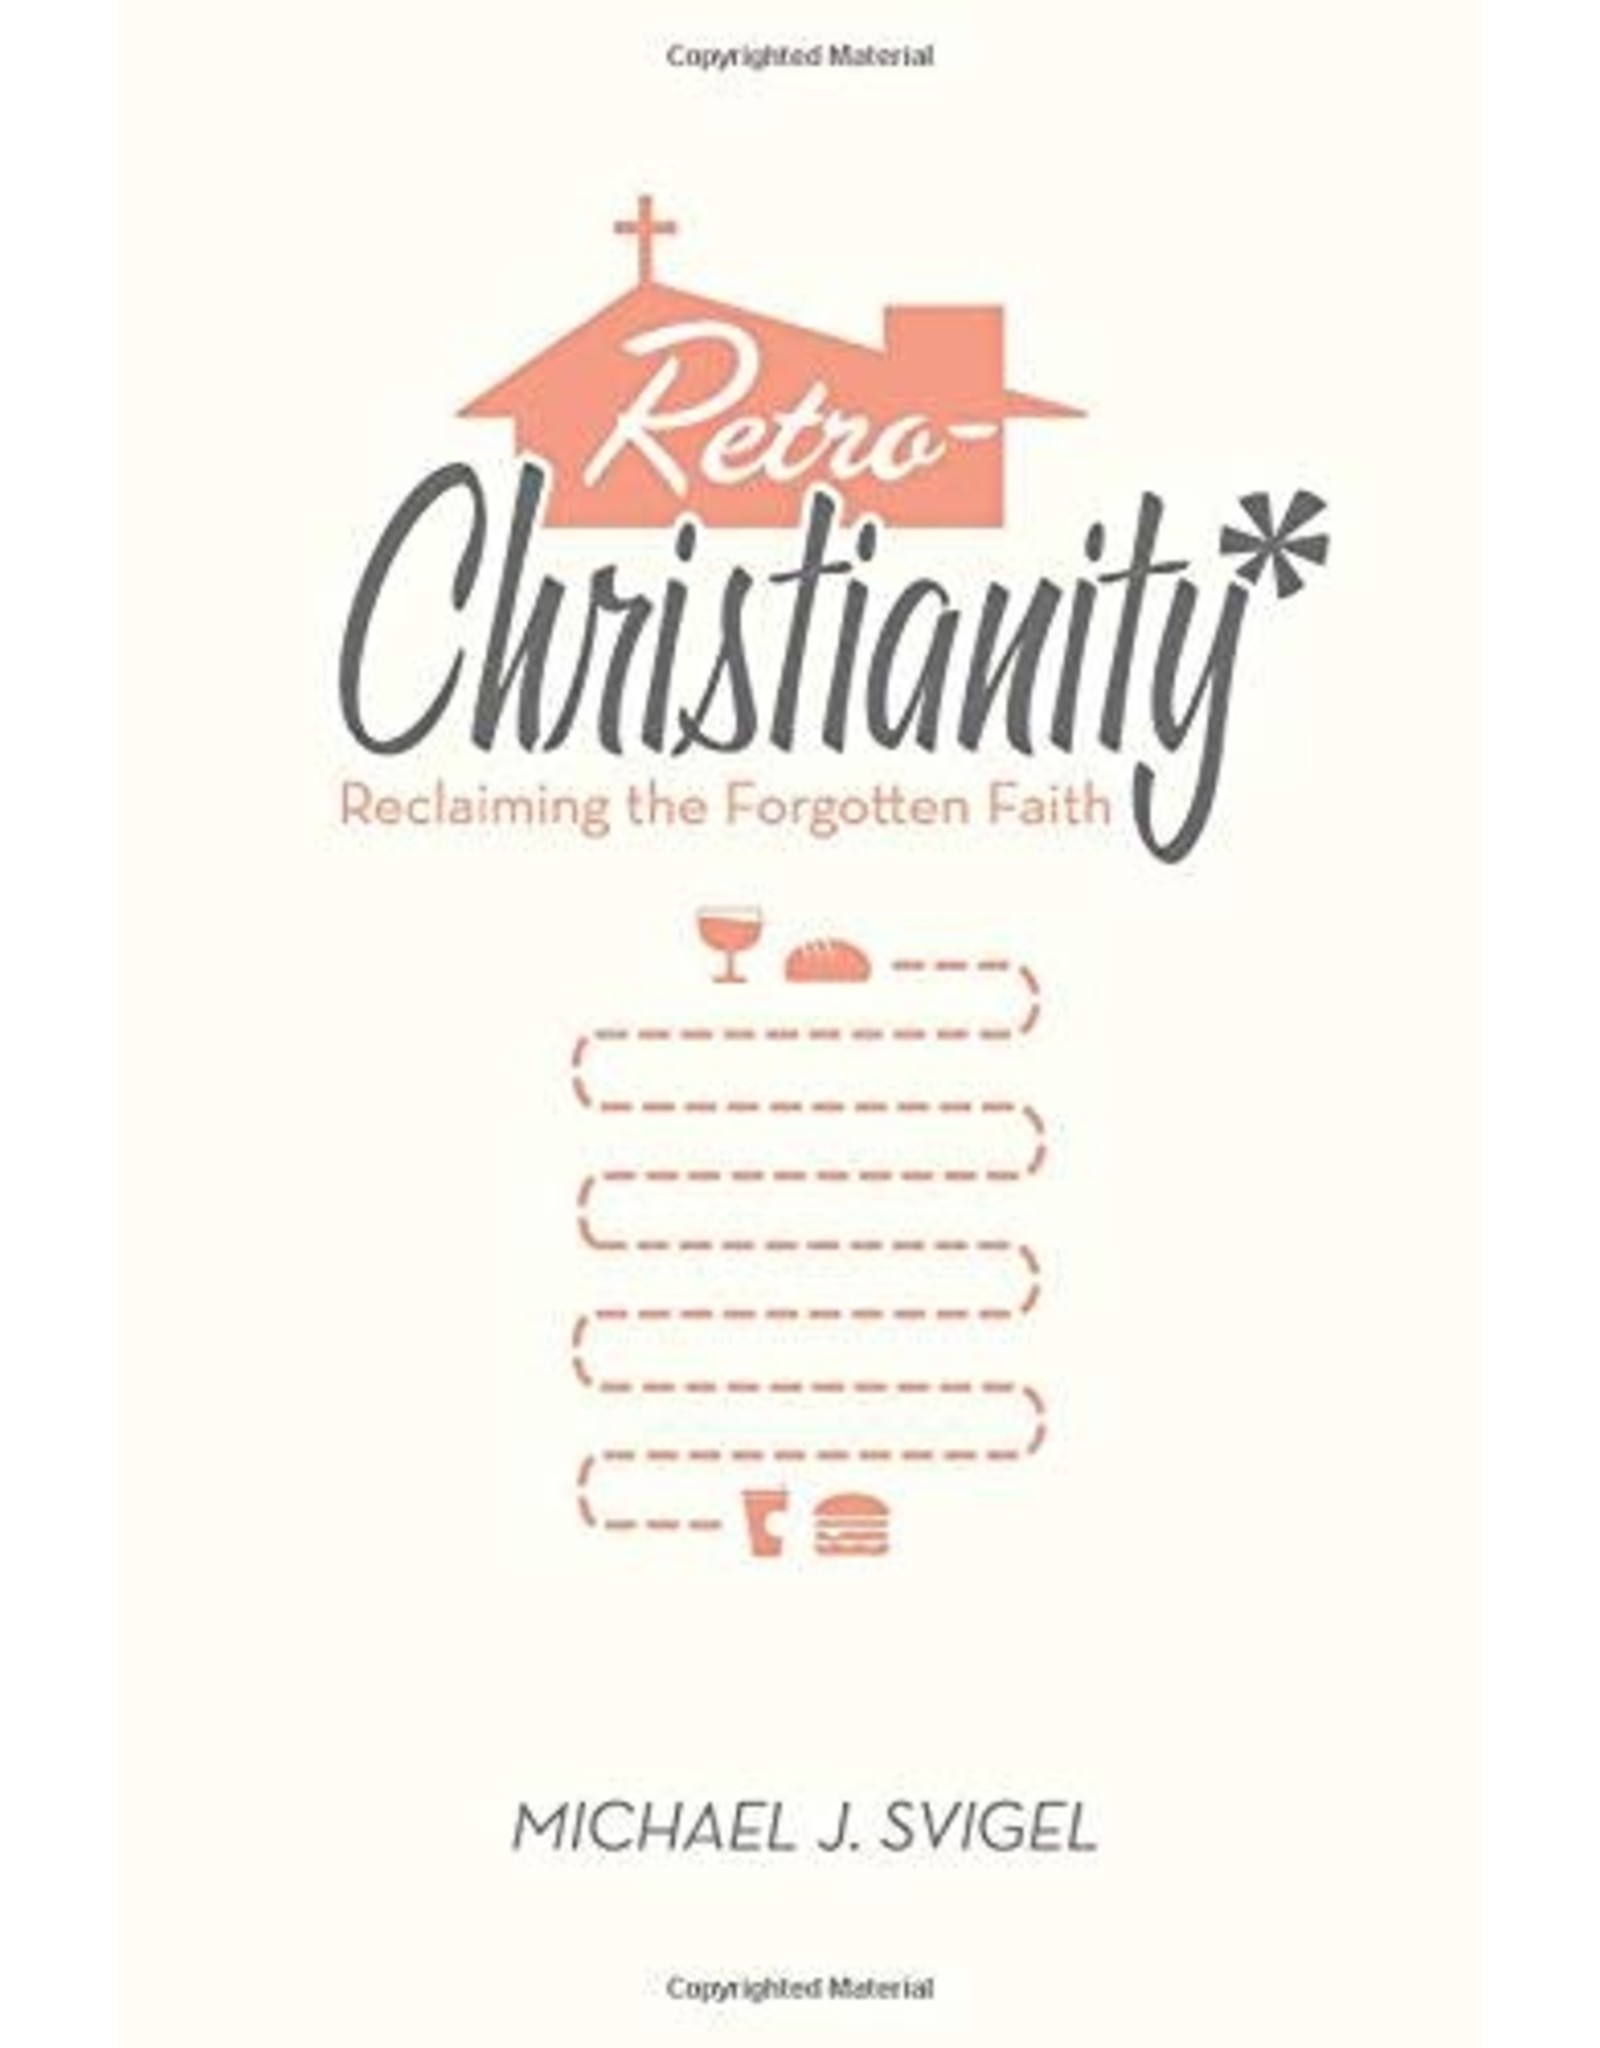 Crossway / Good News Retro Christianity: Reclaiming the Forgotten Faith